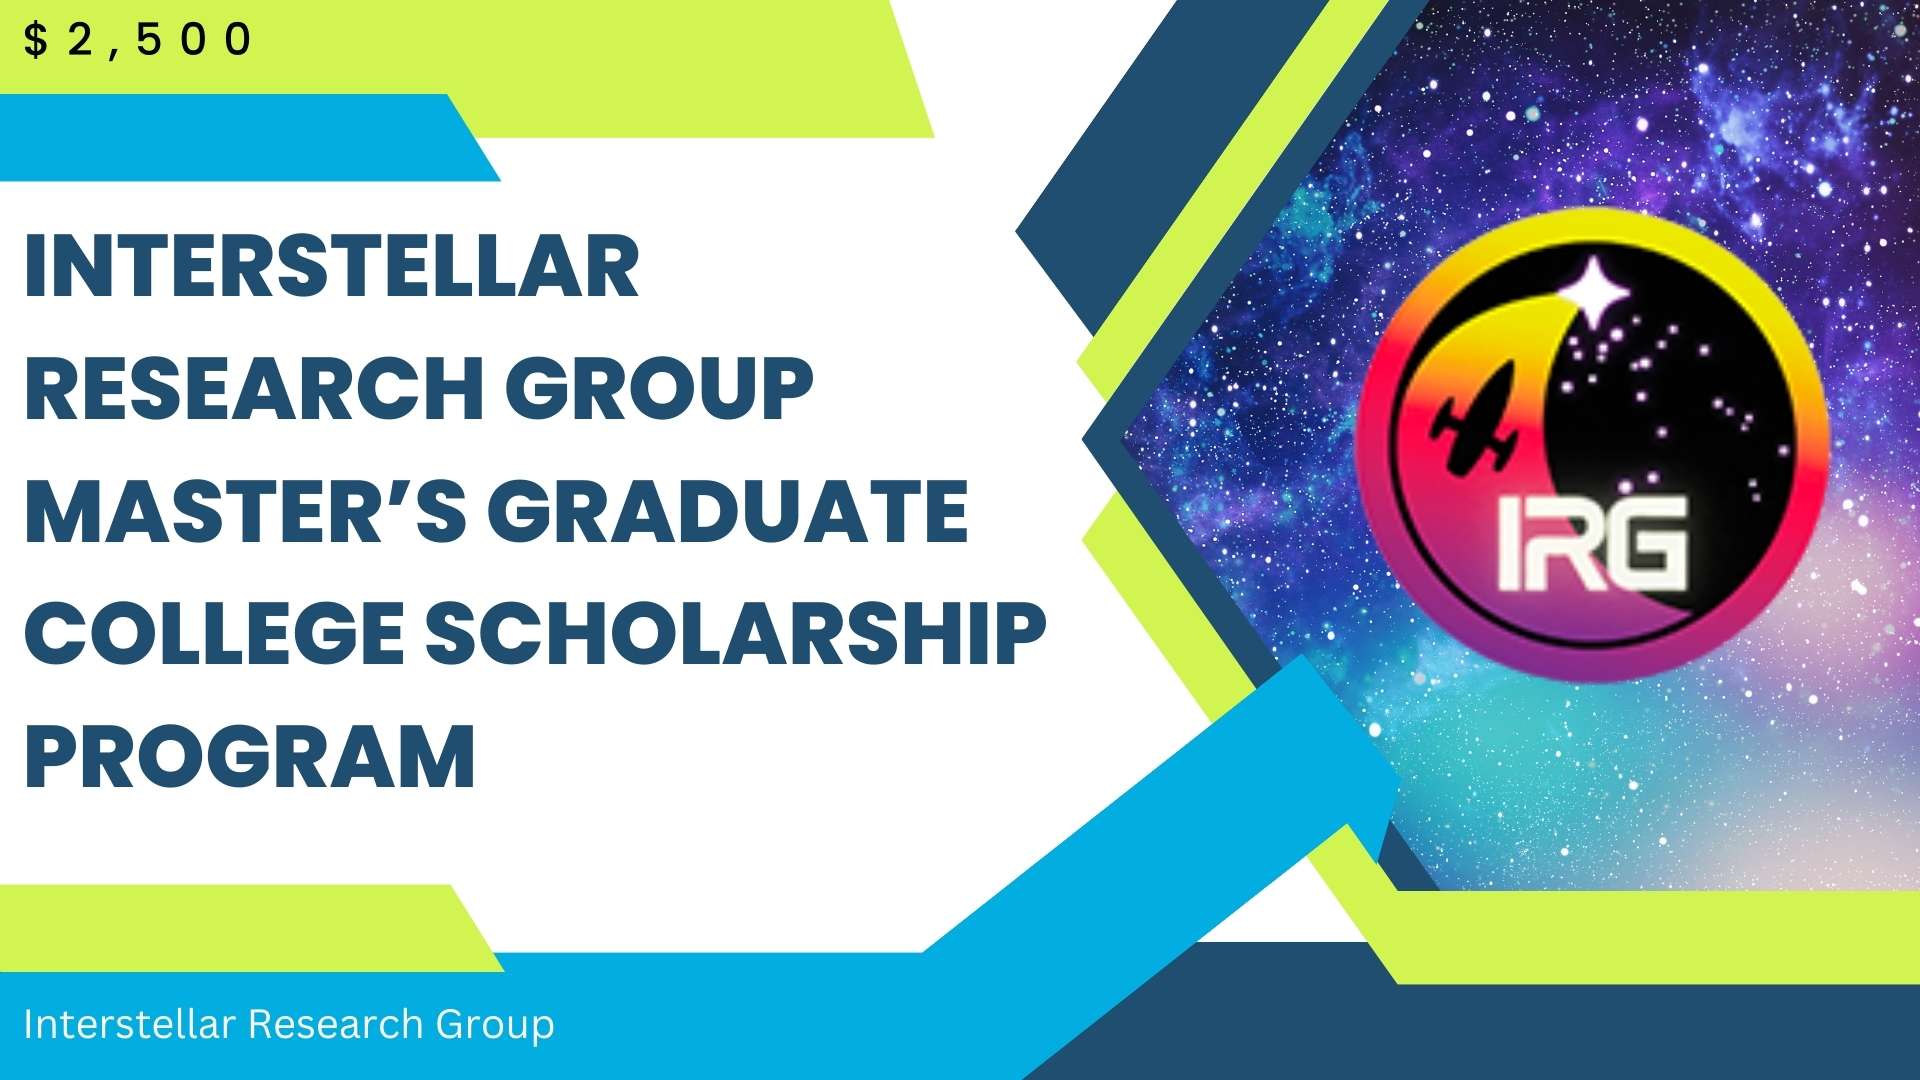 Interstellar Research Group Master's Graduate College Scholarship Program